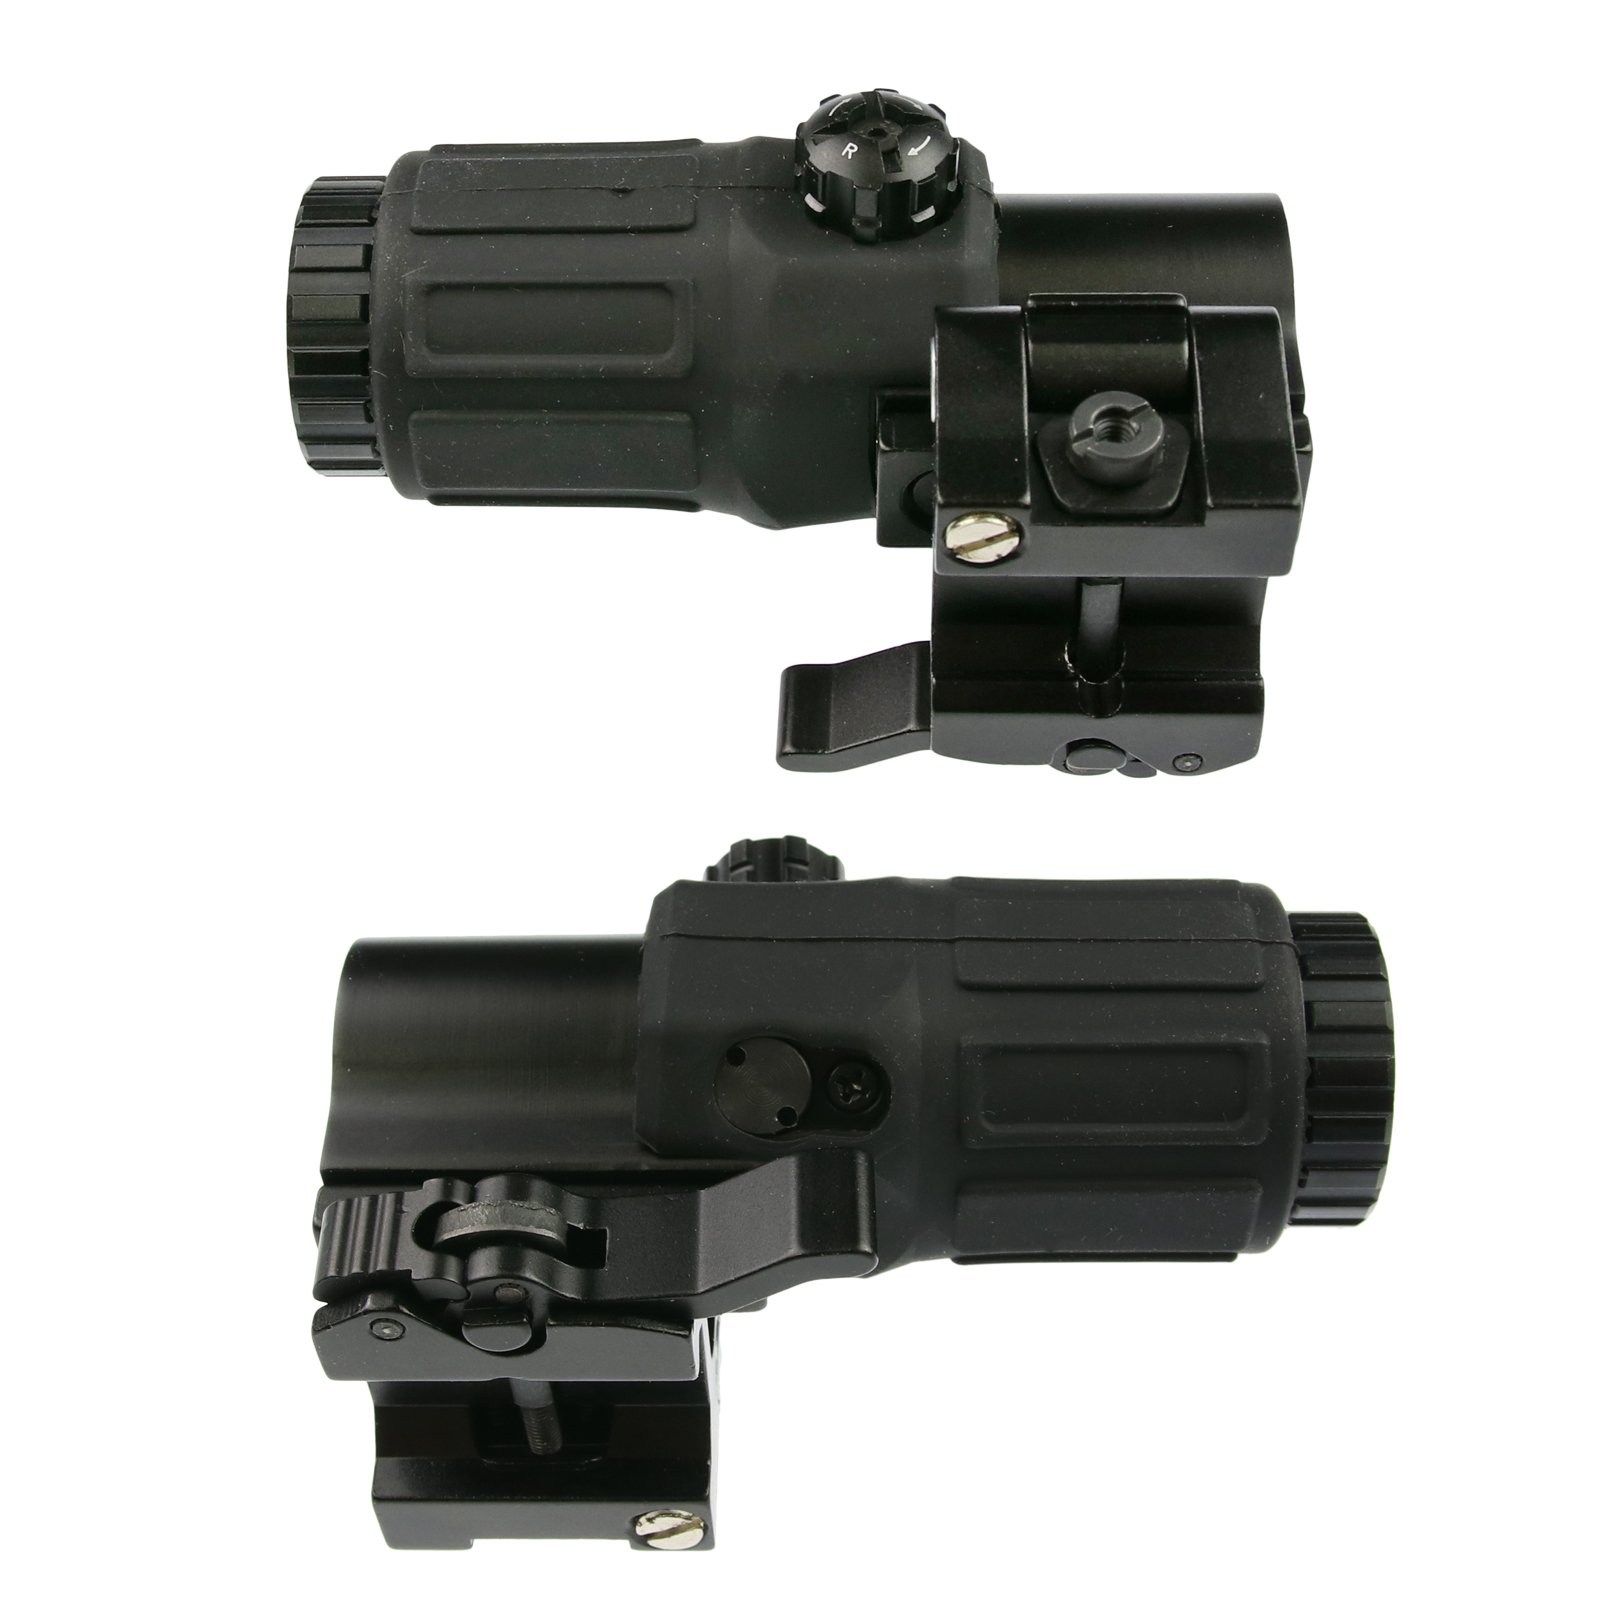 OpTacs Aim-O G33 Magnifier (3 x) STS mit Schnellverschluss